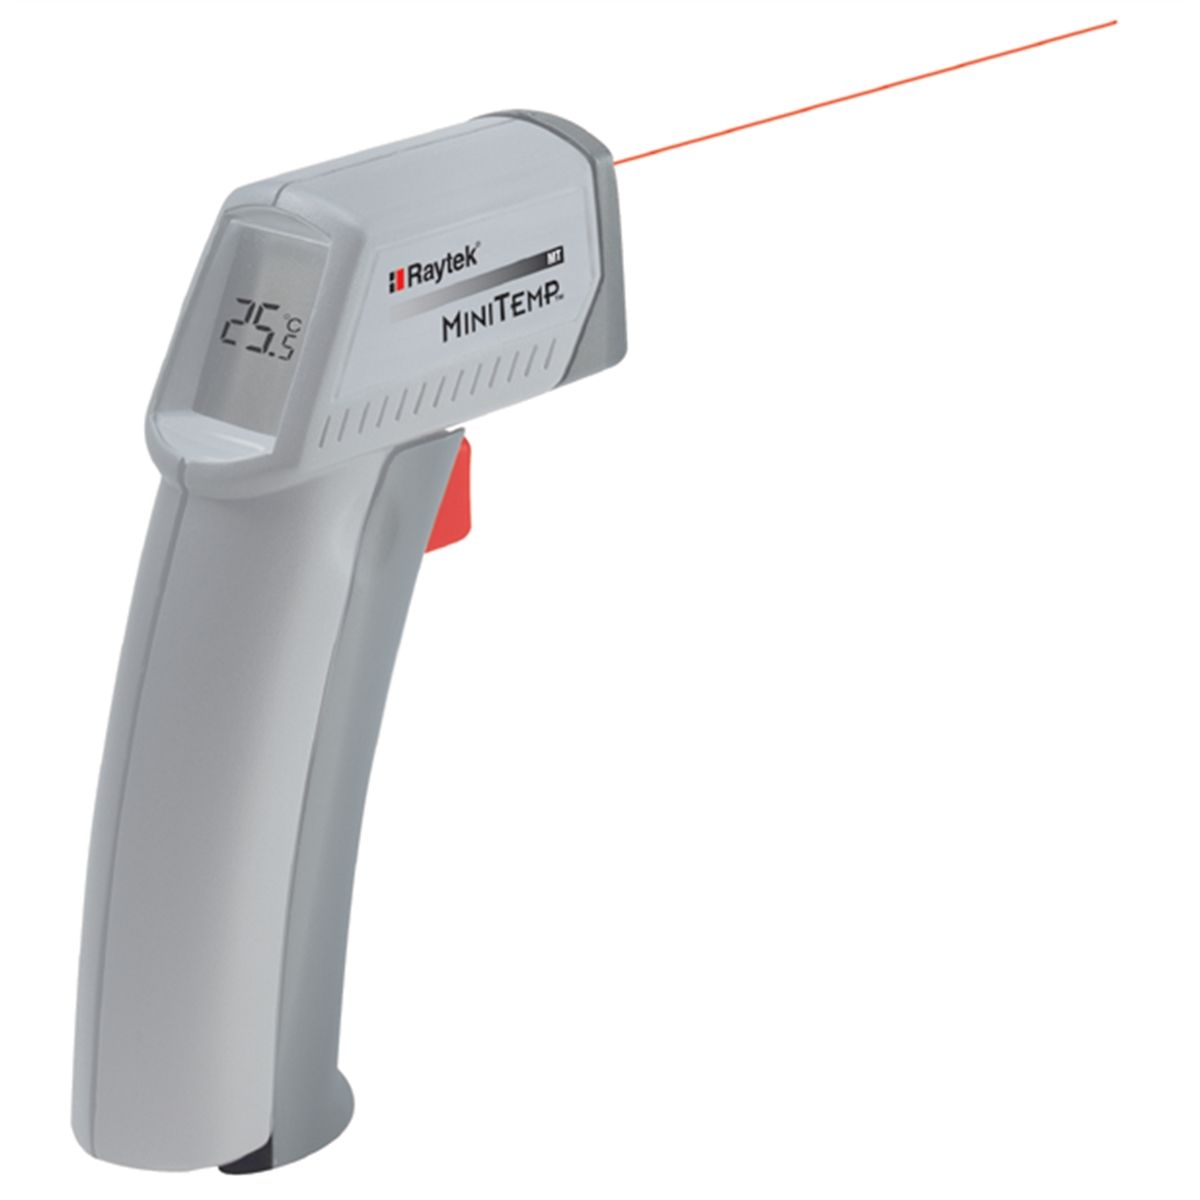 Mastercool 52220 - 1 Pocket Analog Thermometer